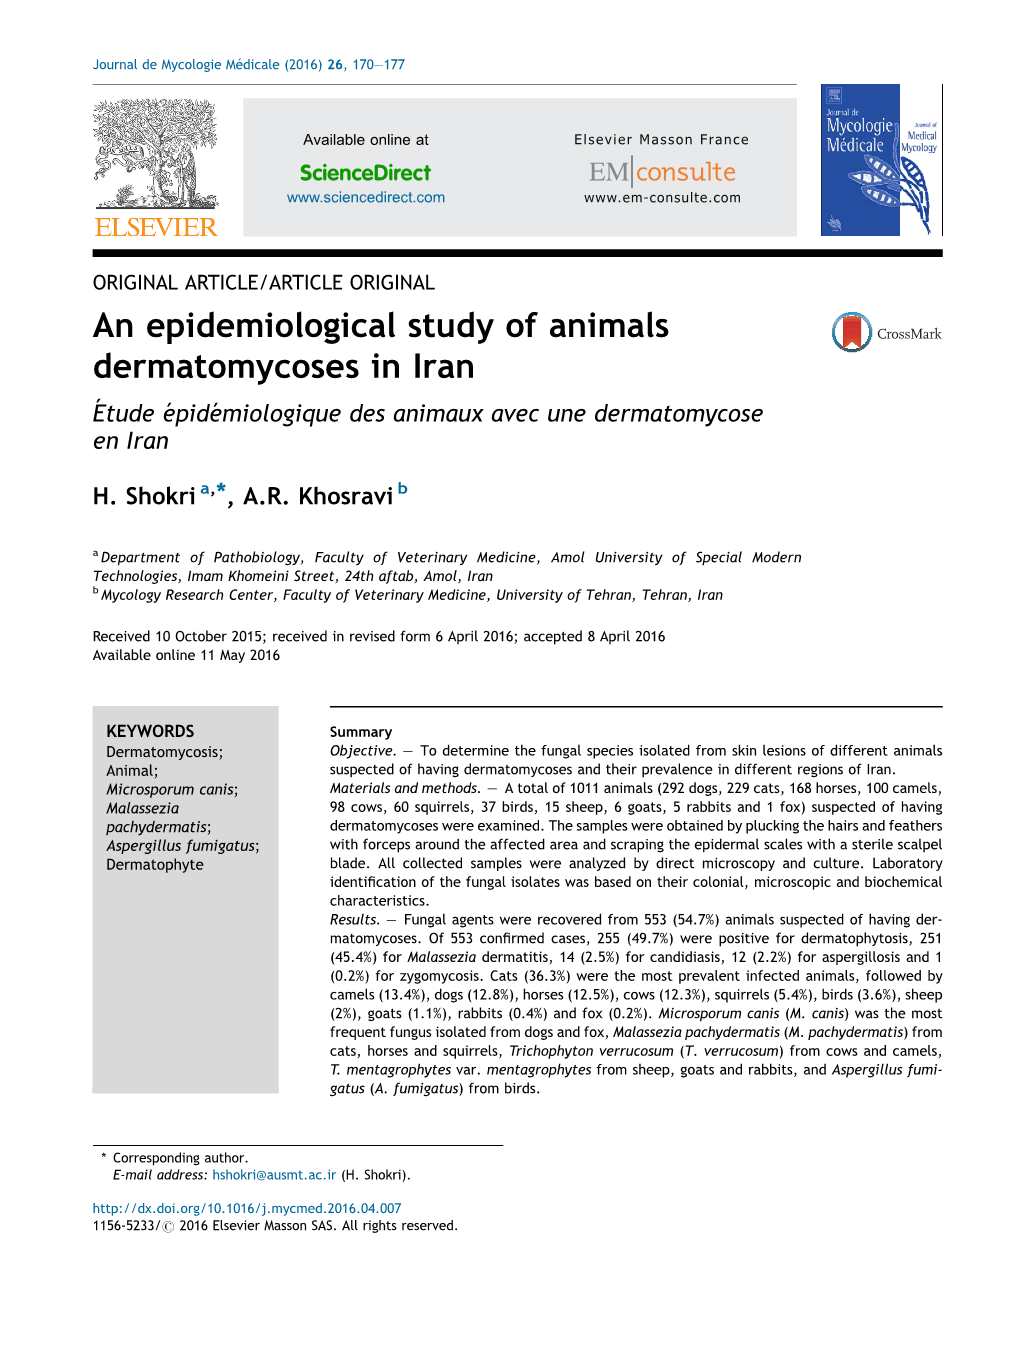 An Epidemiological Study of Animals Dermatomycoses in Iran ´Etude´ Epide´Miologique Des Animaux Avec Une Dermatomycose En Iran